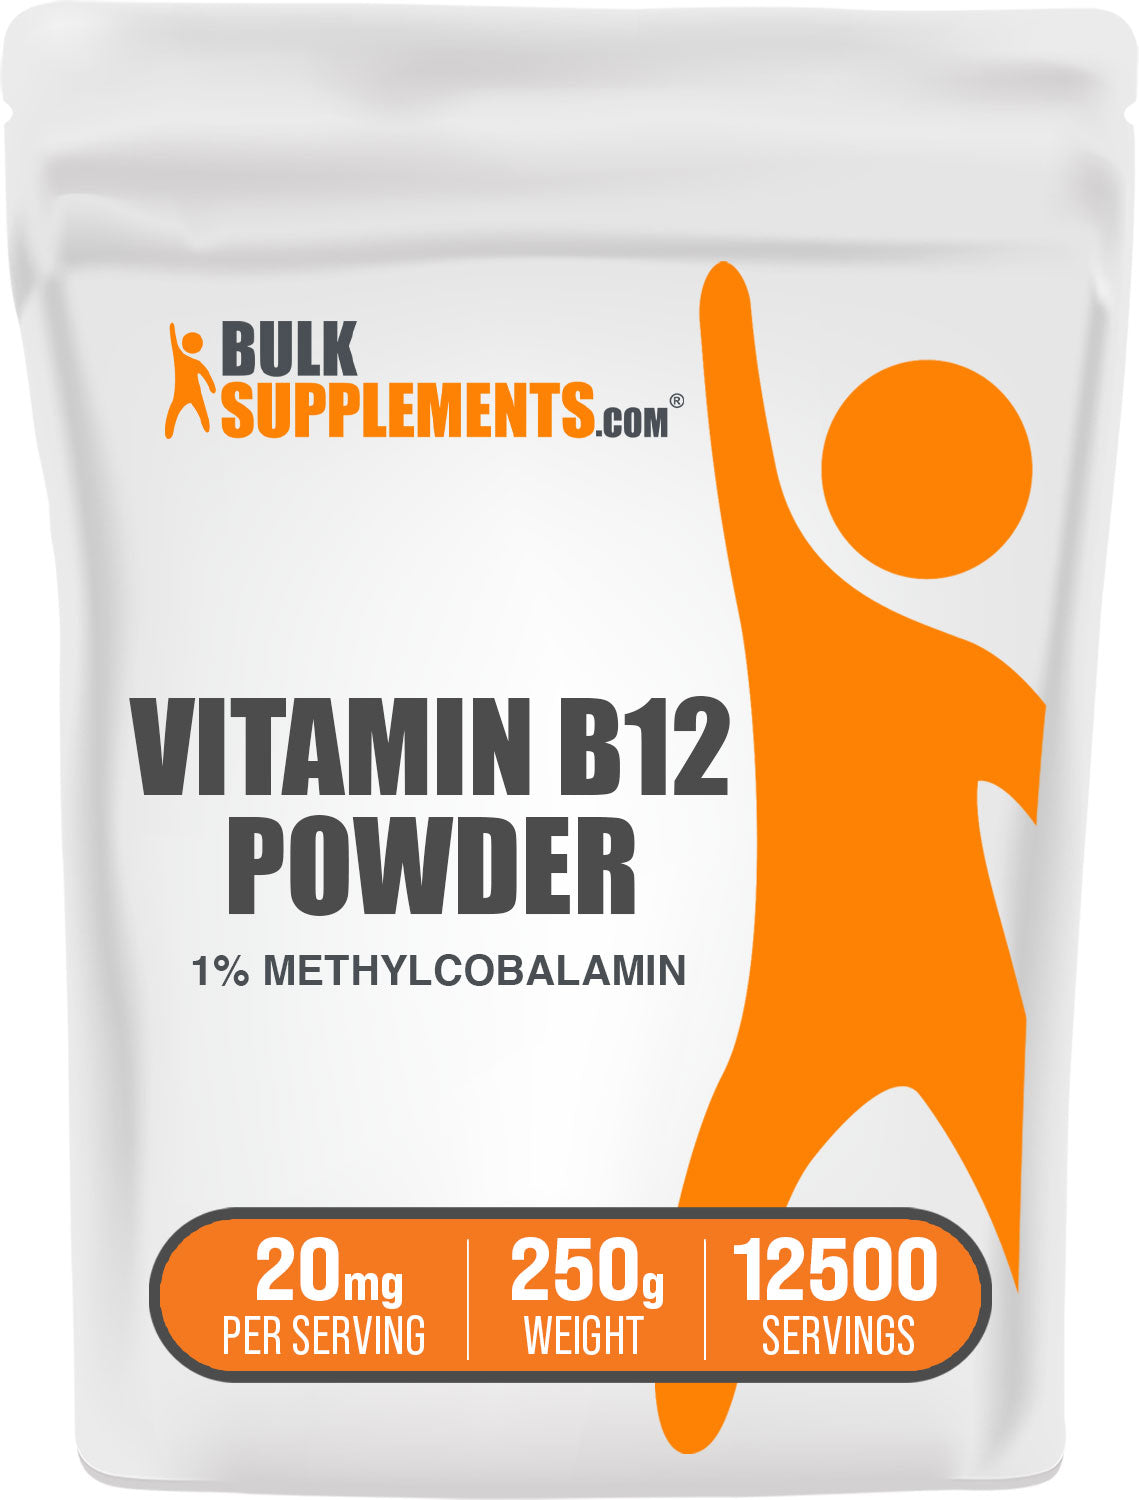 BulkSupplements Vitamin B12 Powder 1% Methylcobalamin 250g bag